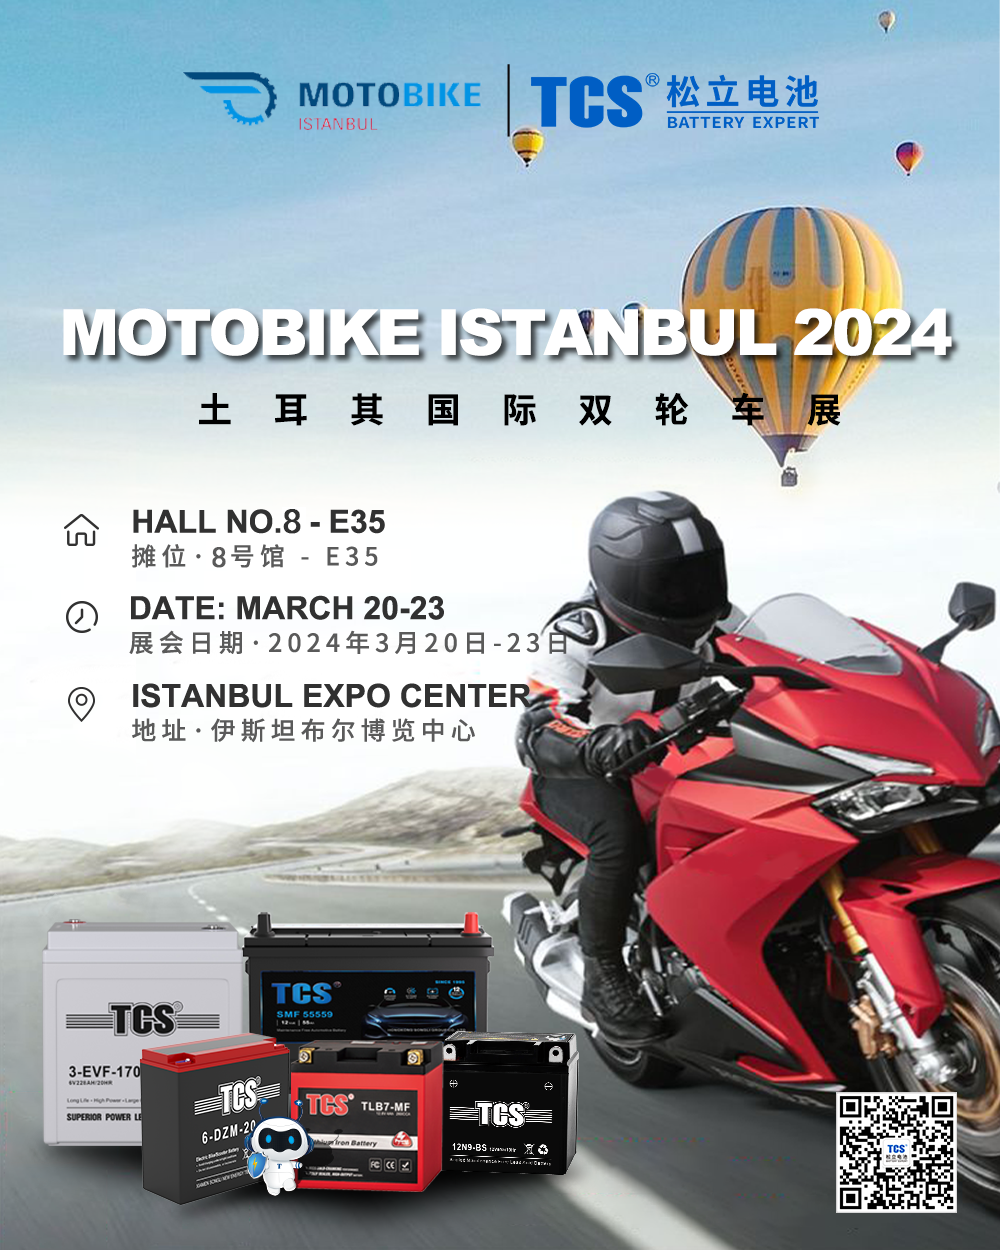 Moto Istanbul 2024